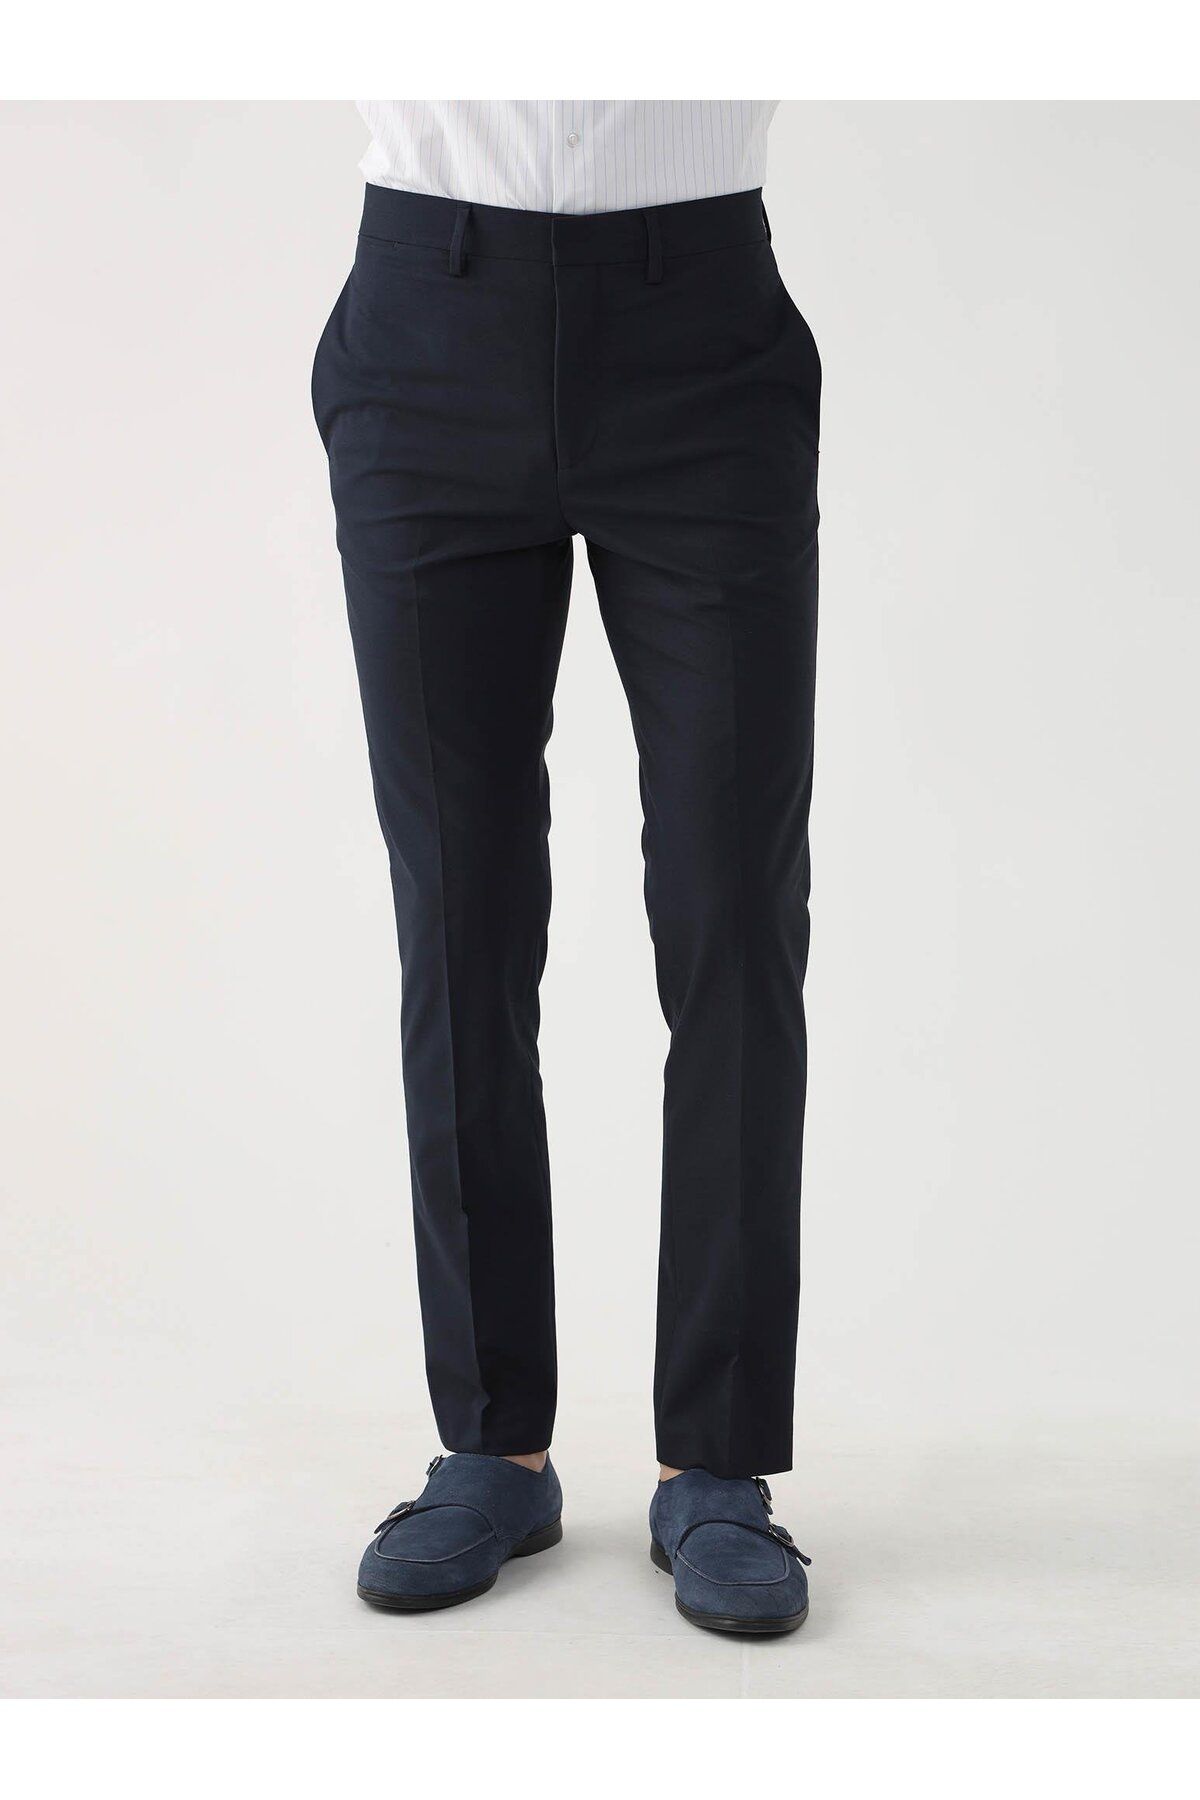 Dufy Lacivert Erkek Regular Fit Düz Klasik Pantolon - 84536